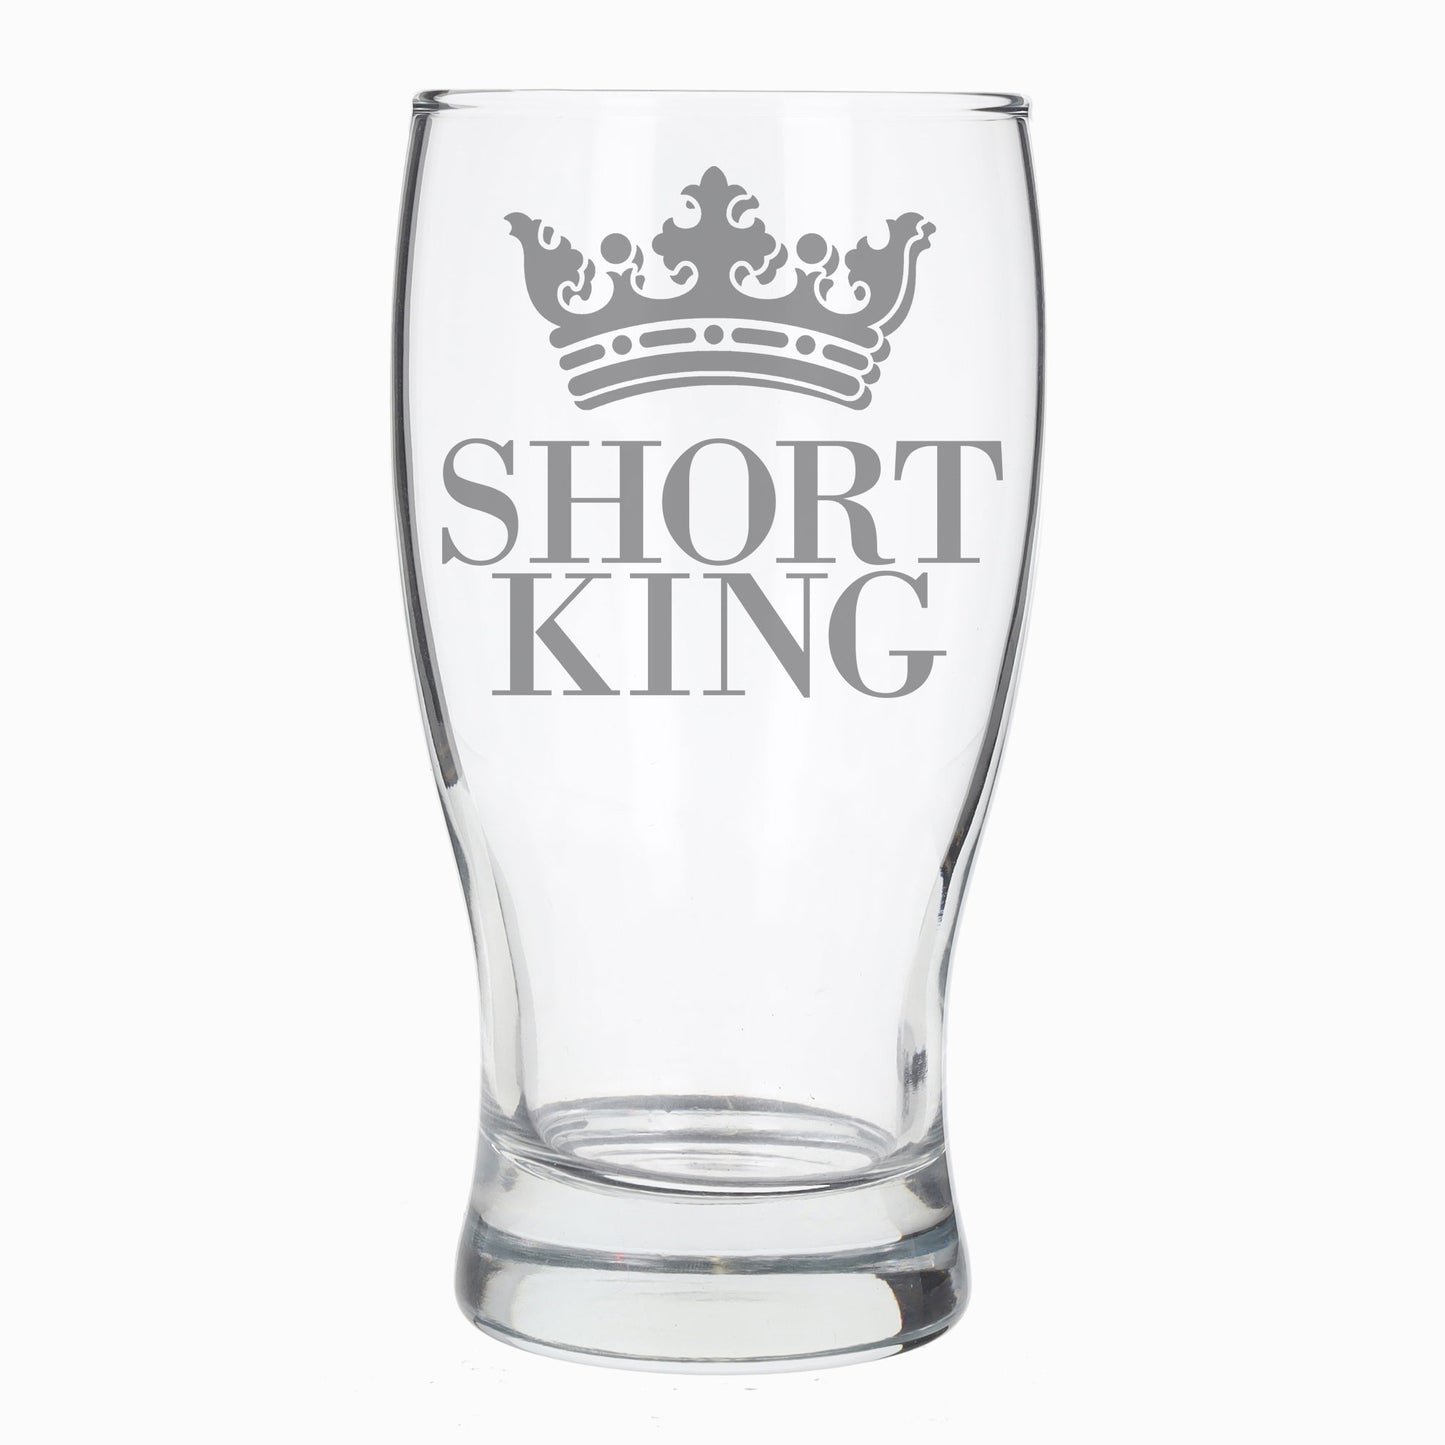 Short King Engraved Pint Glass  - Always Looking Good -   